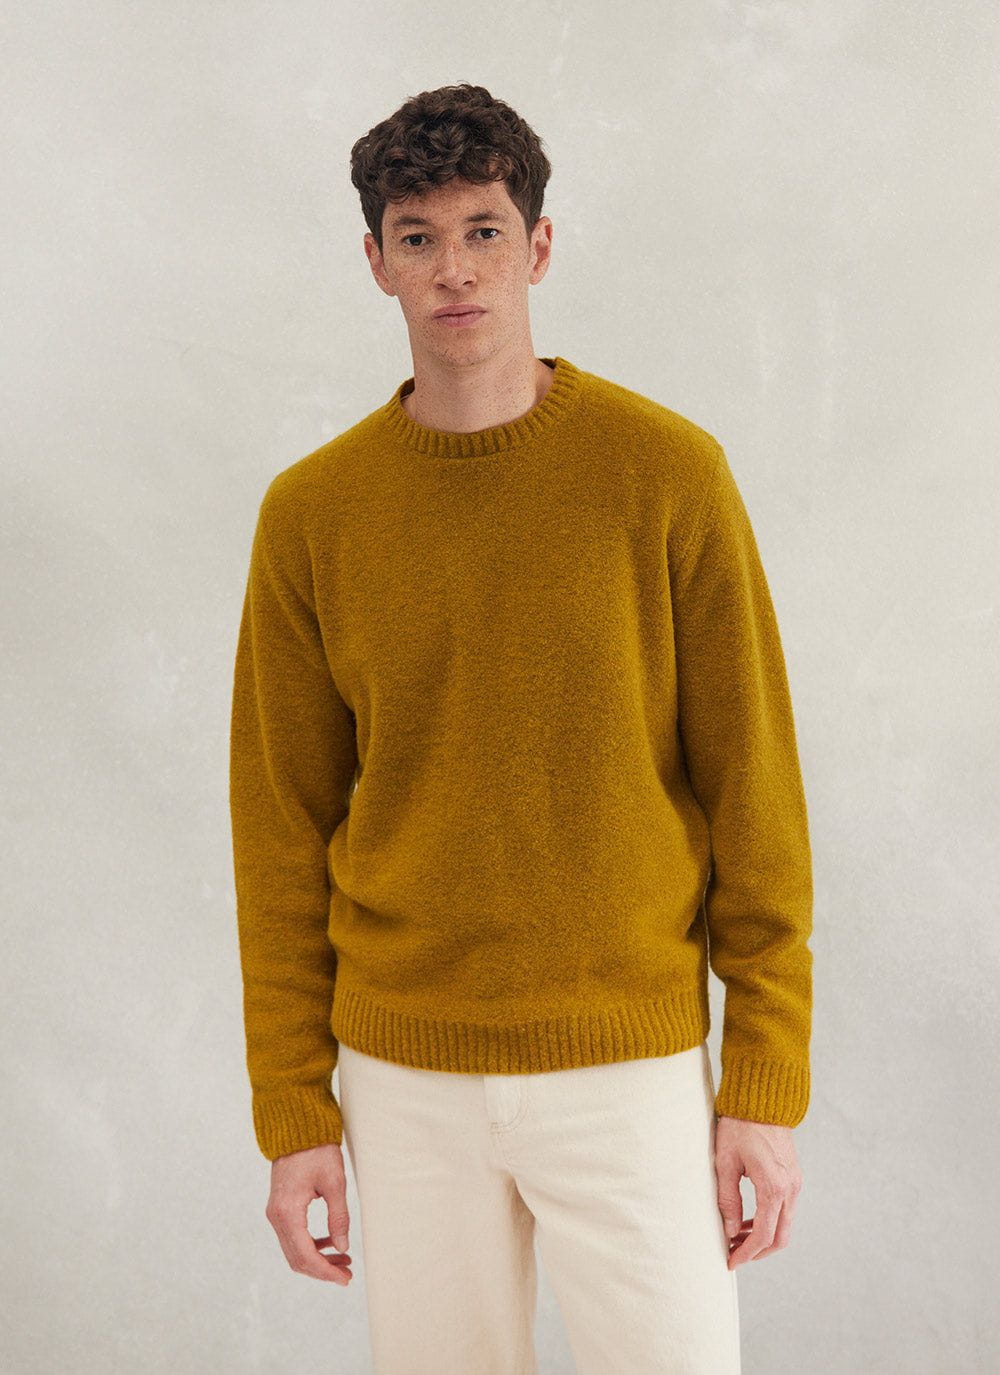 Crew Neck | Boucle Wool | Mustard & Percival Menswear